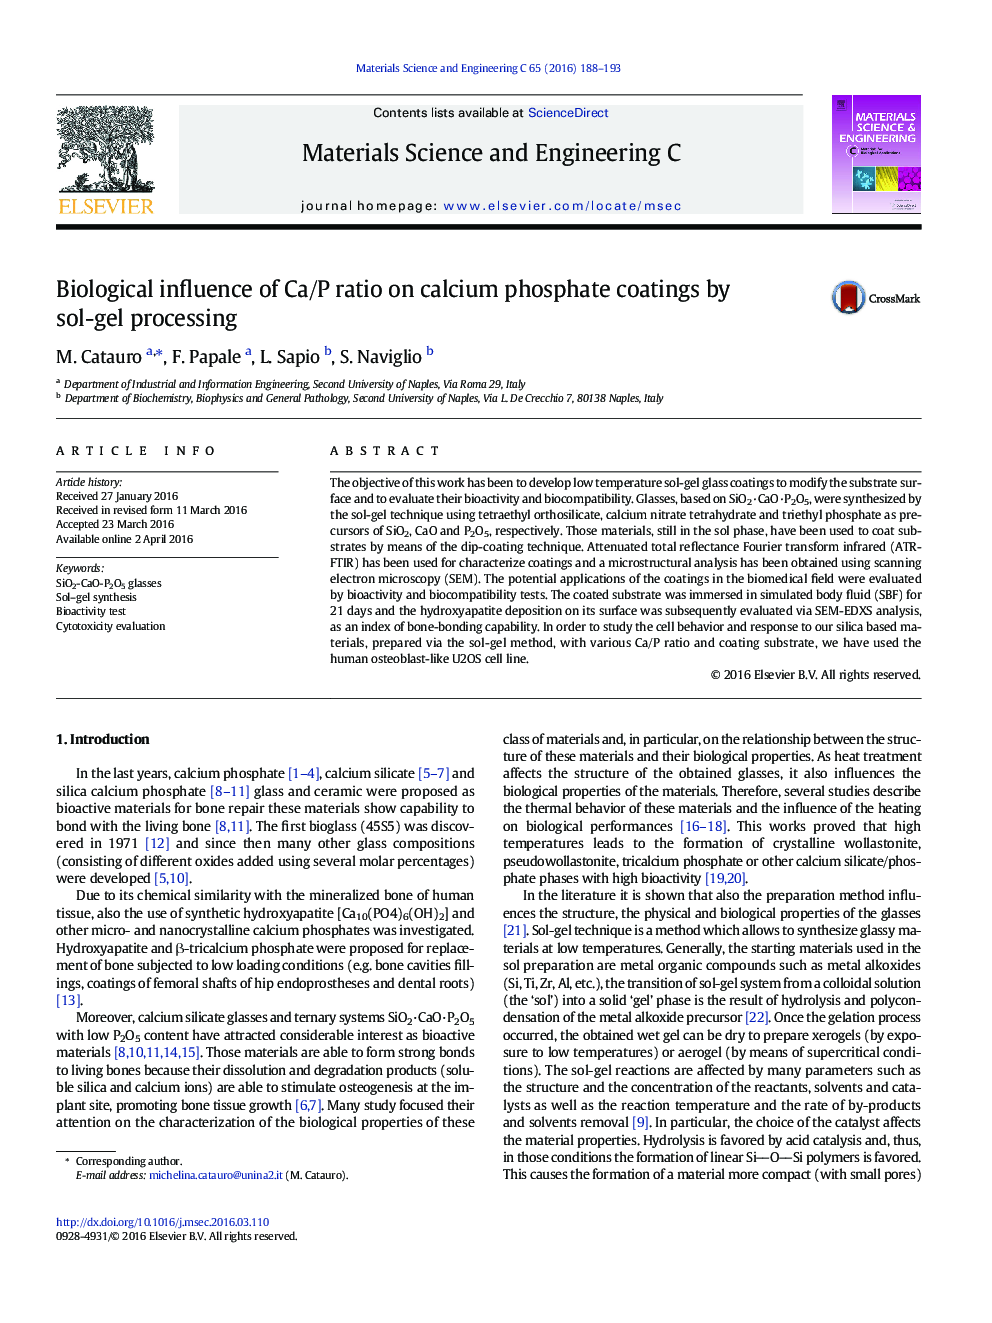 Biological influence of Ca/P ratio on calcium phosphate coatings by sol-gel processing